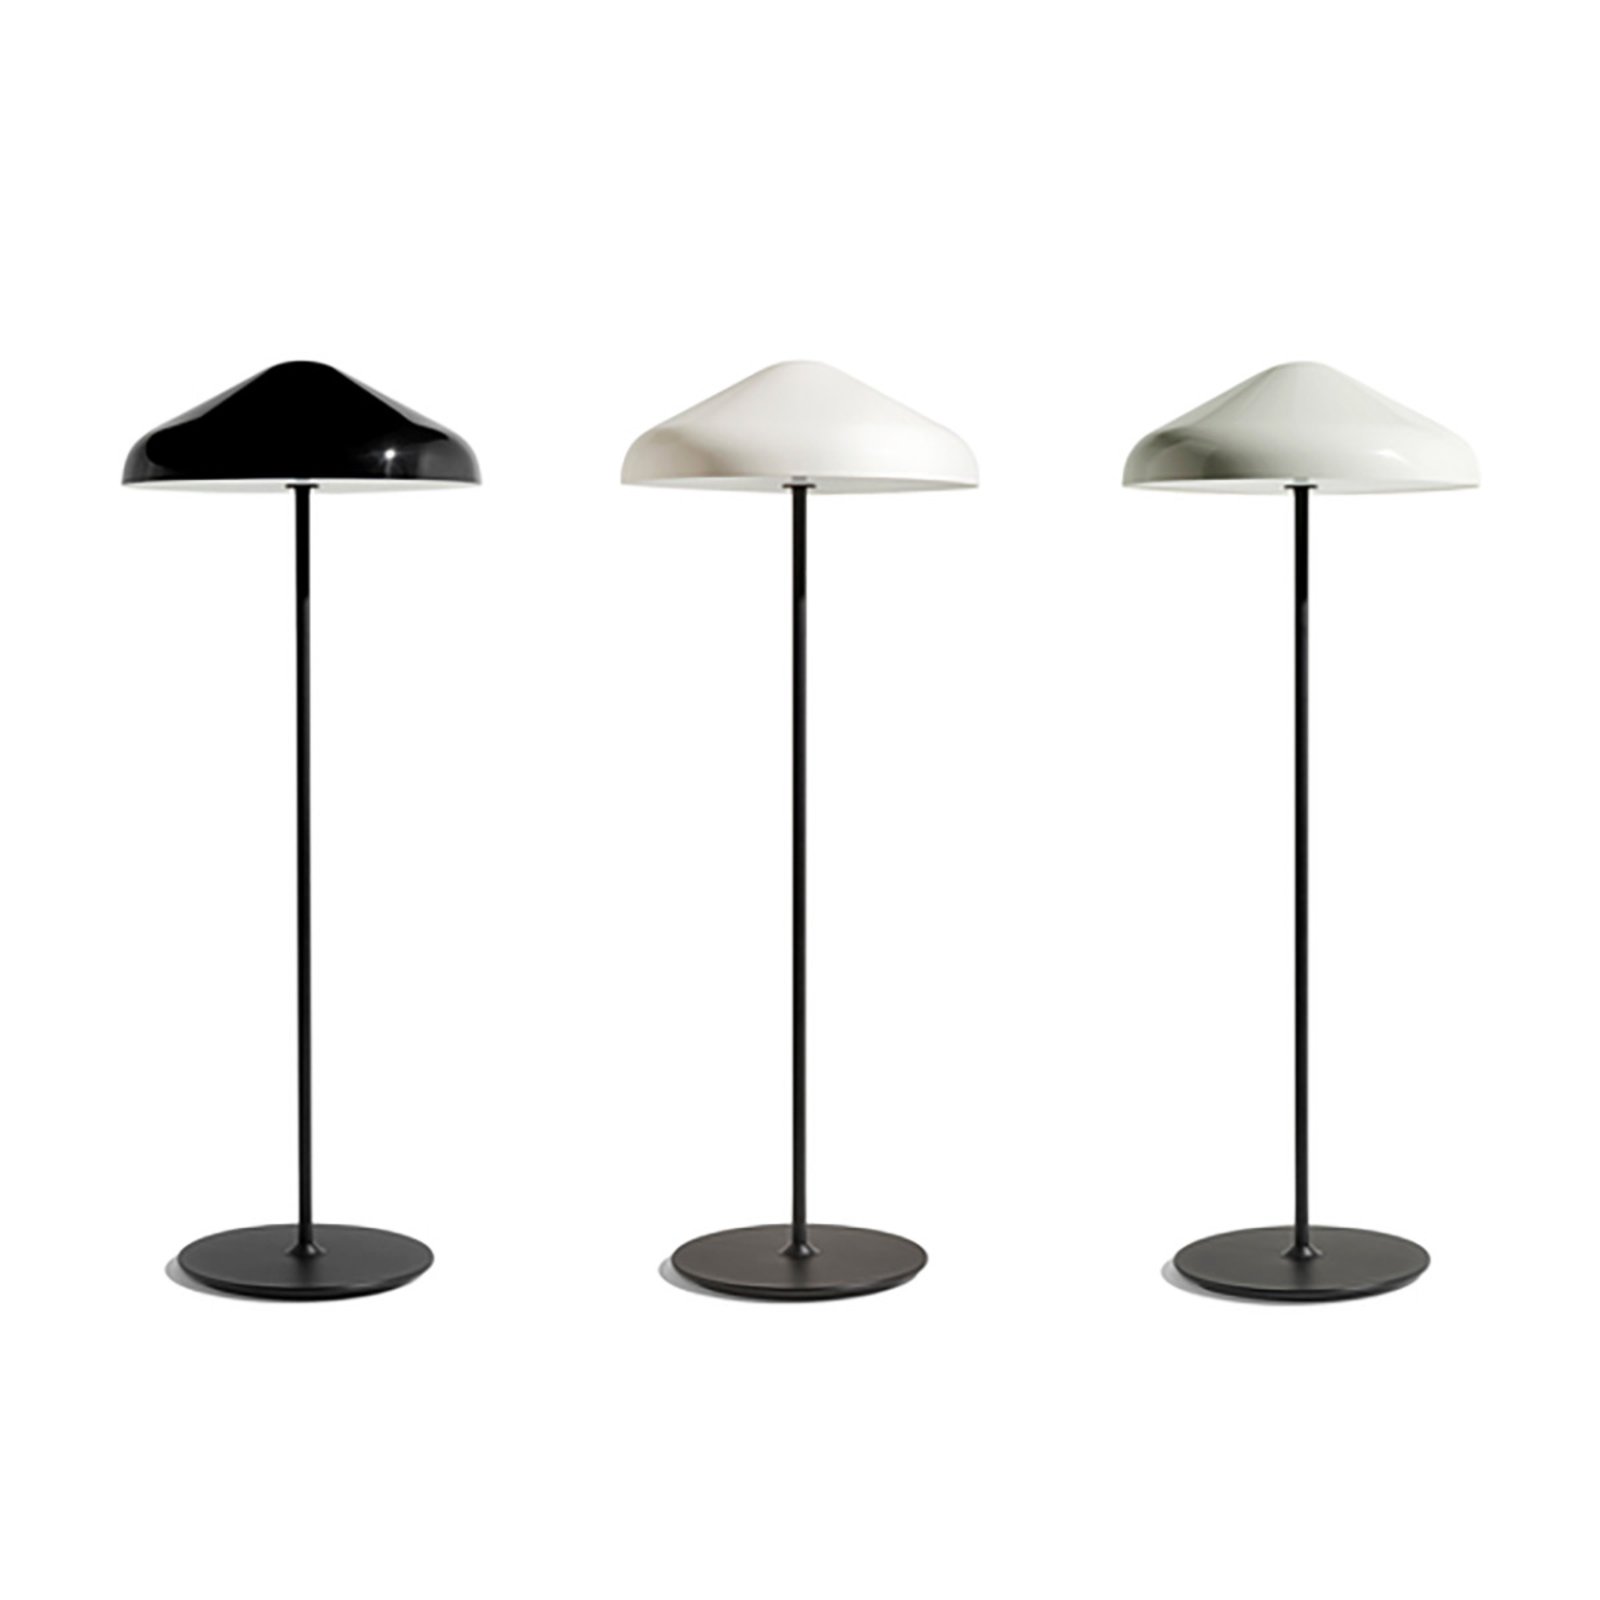 HAY Pao lampadaire design, gris